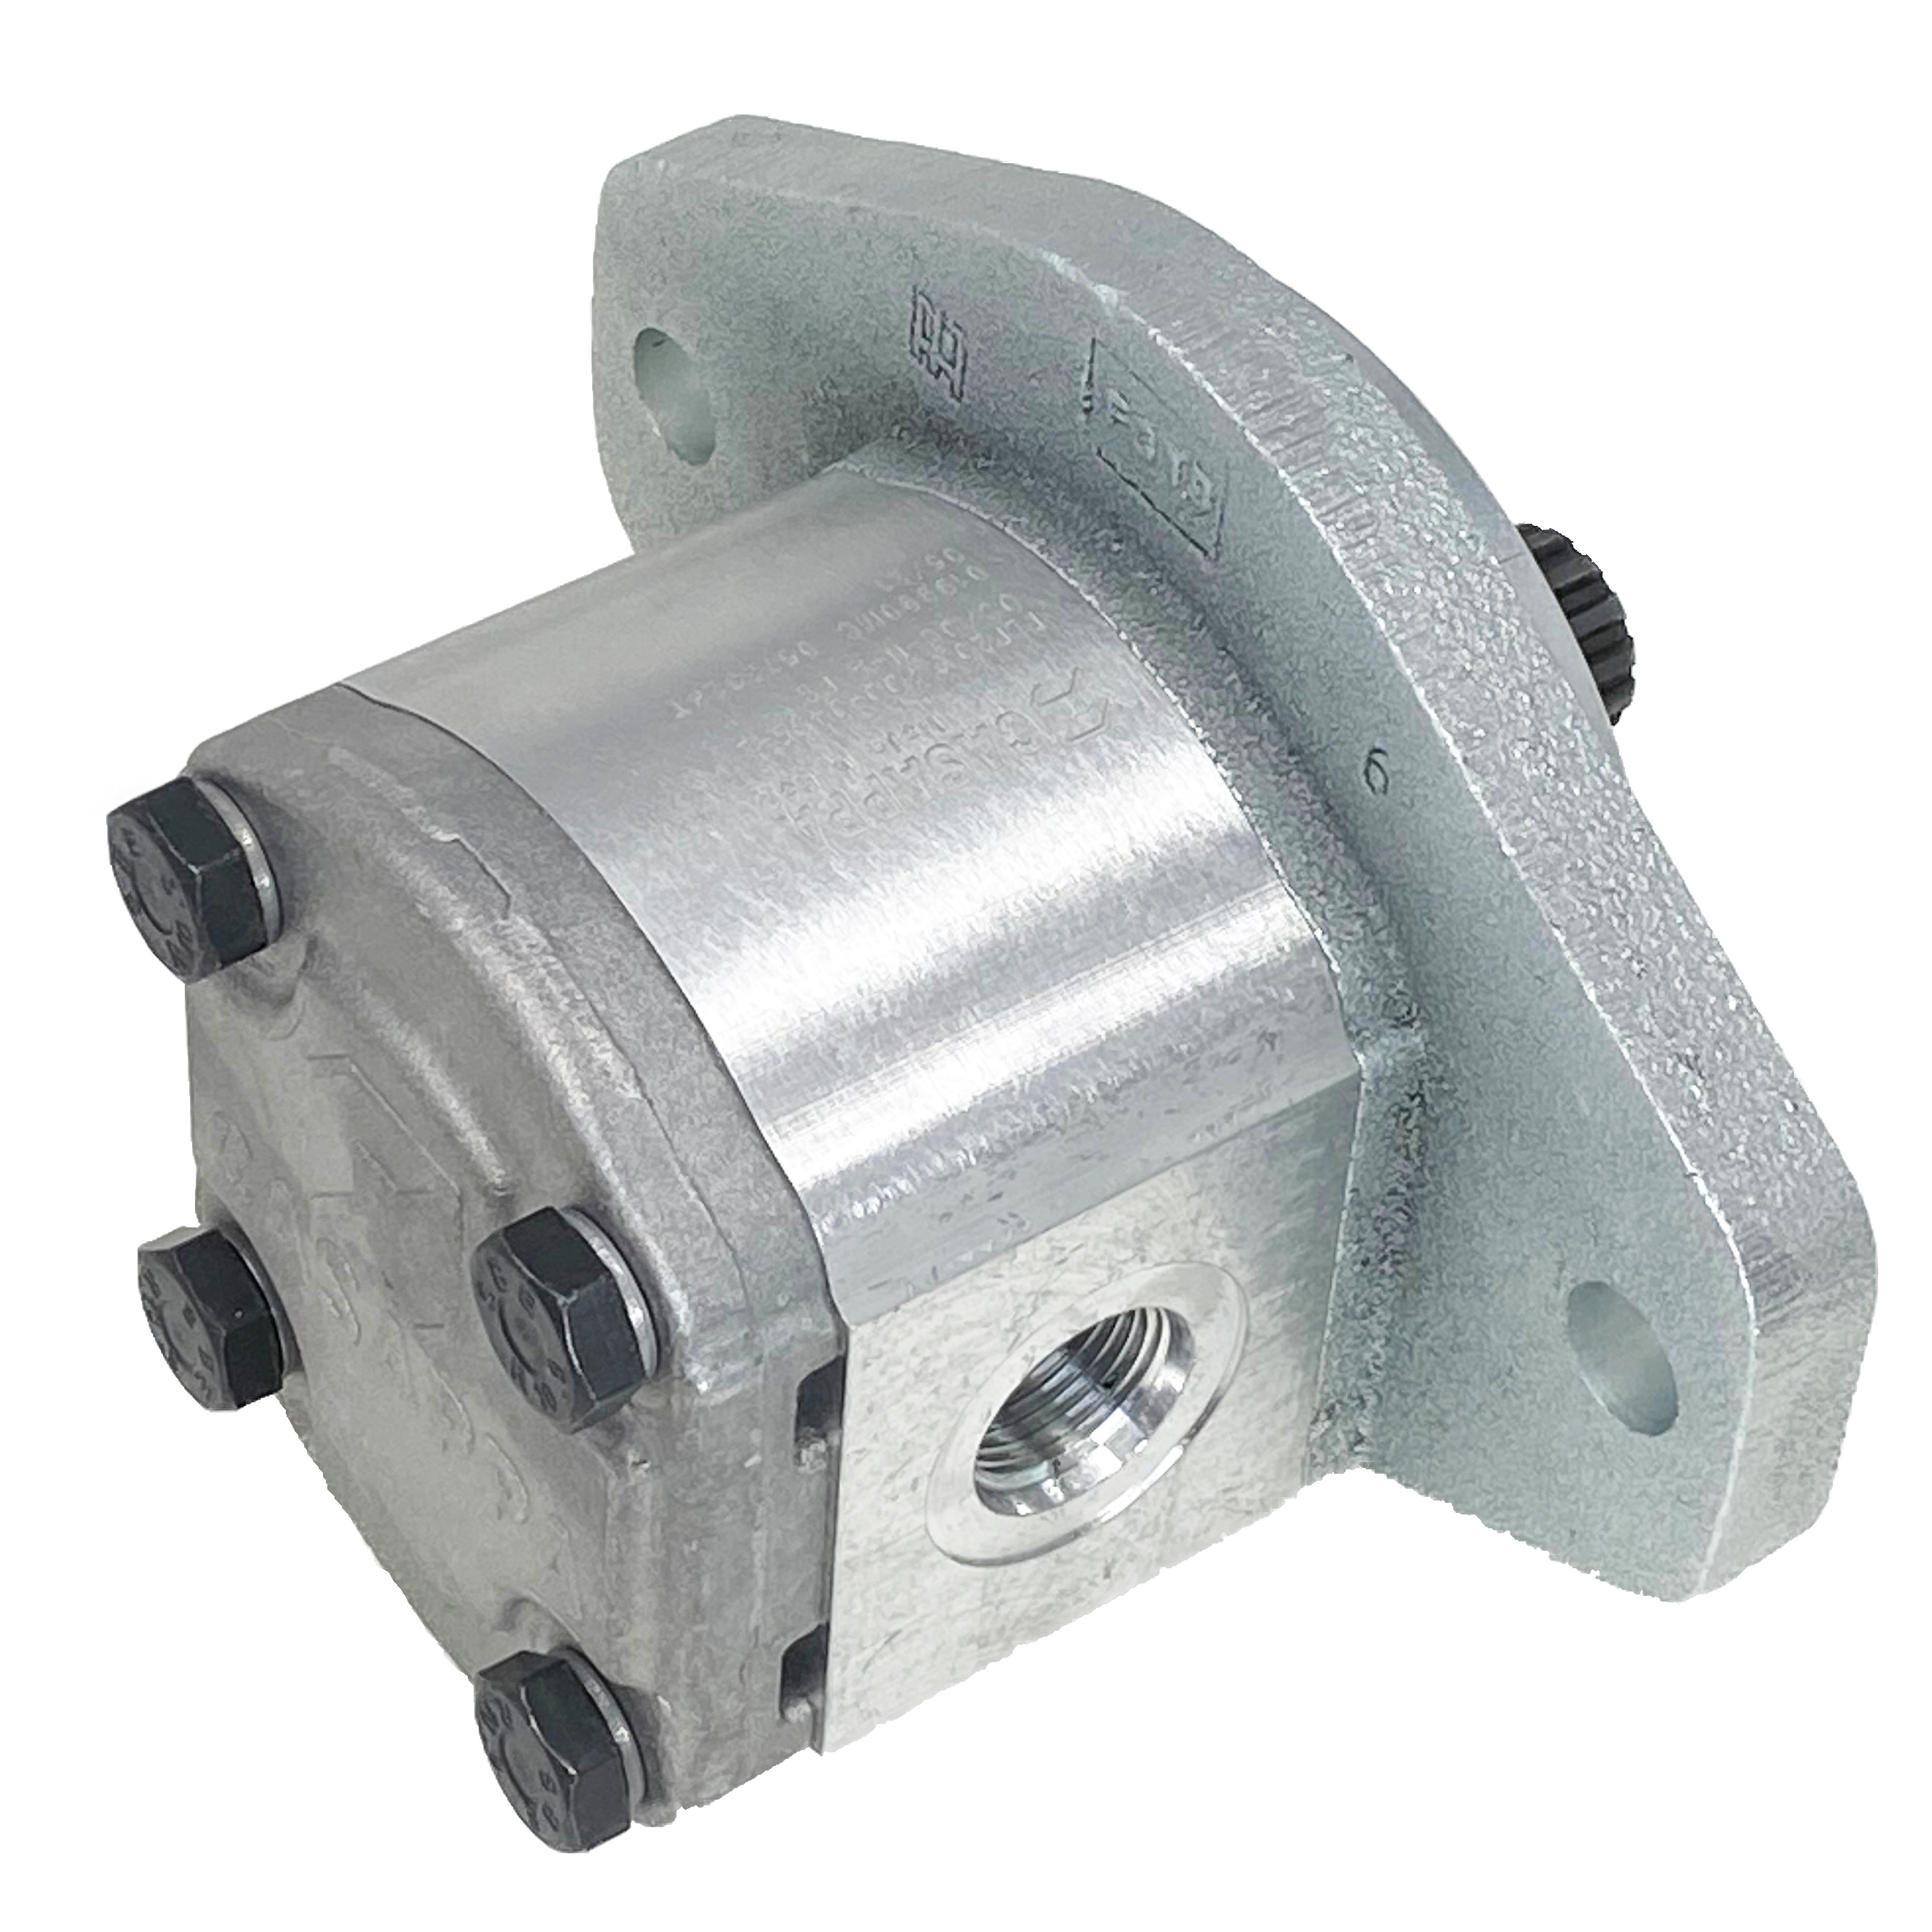 PLM20.9B0-04S5-LOC/OC-N-L : Casappa Polaris Gear Motor, 9.17cc, 3625psi Rated, 3500RPM, Reversible Interior Drain, 13T 16/32dp Shaft, SAE B 2-Bolt Flange, 0.625 (5/8") #10 SAE Inlet, 0.625 (5/8") #10 SAE Outlet, Aluminum Body, Cast Iron Flange